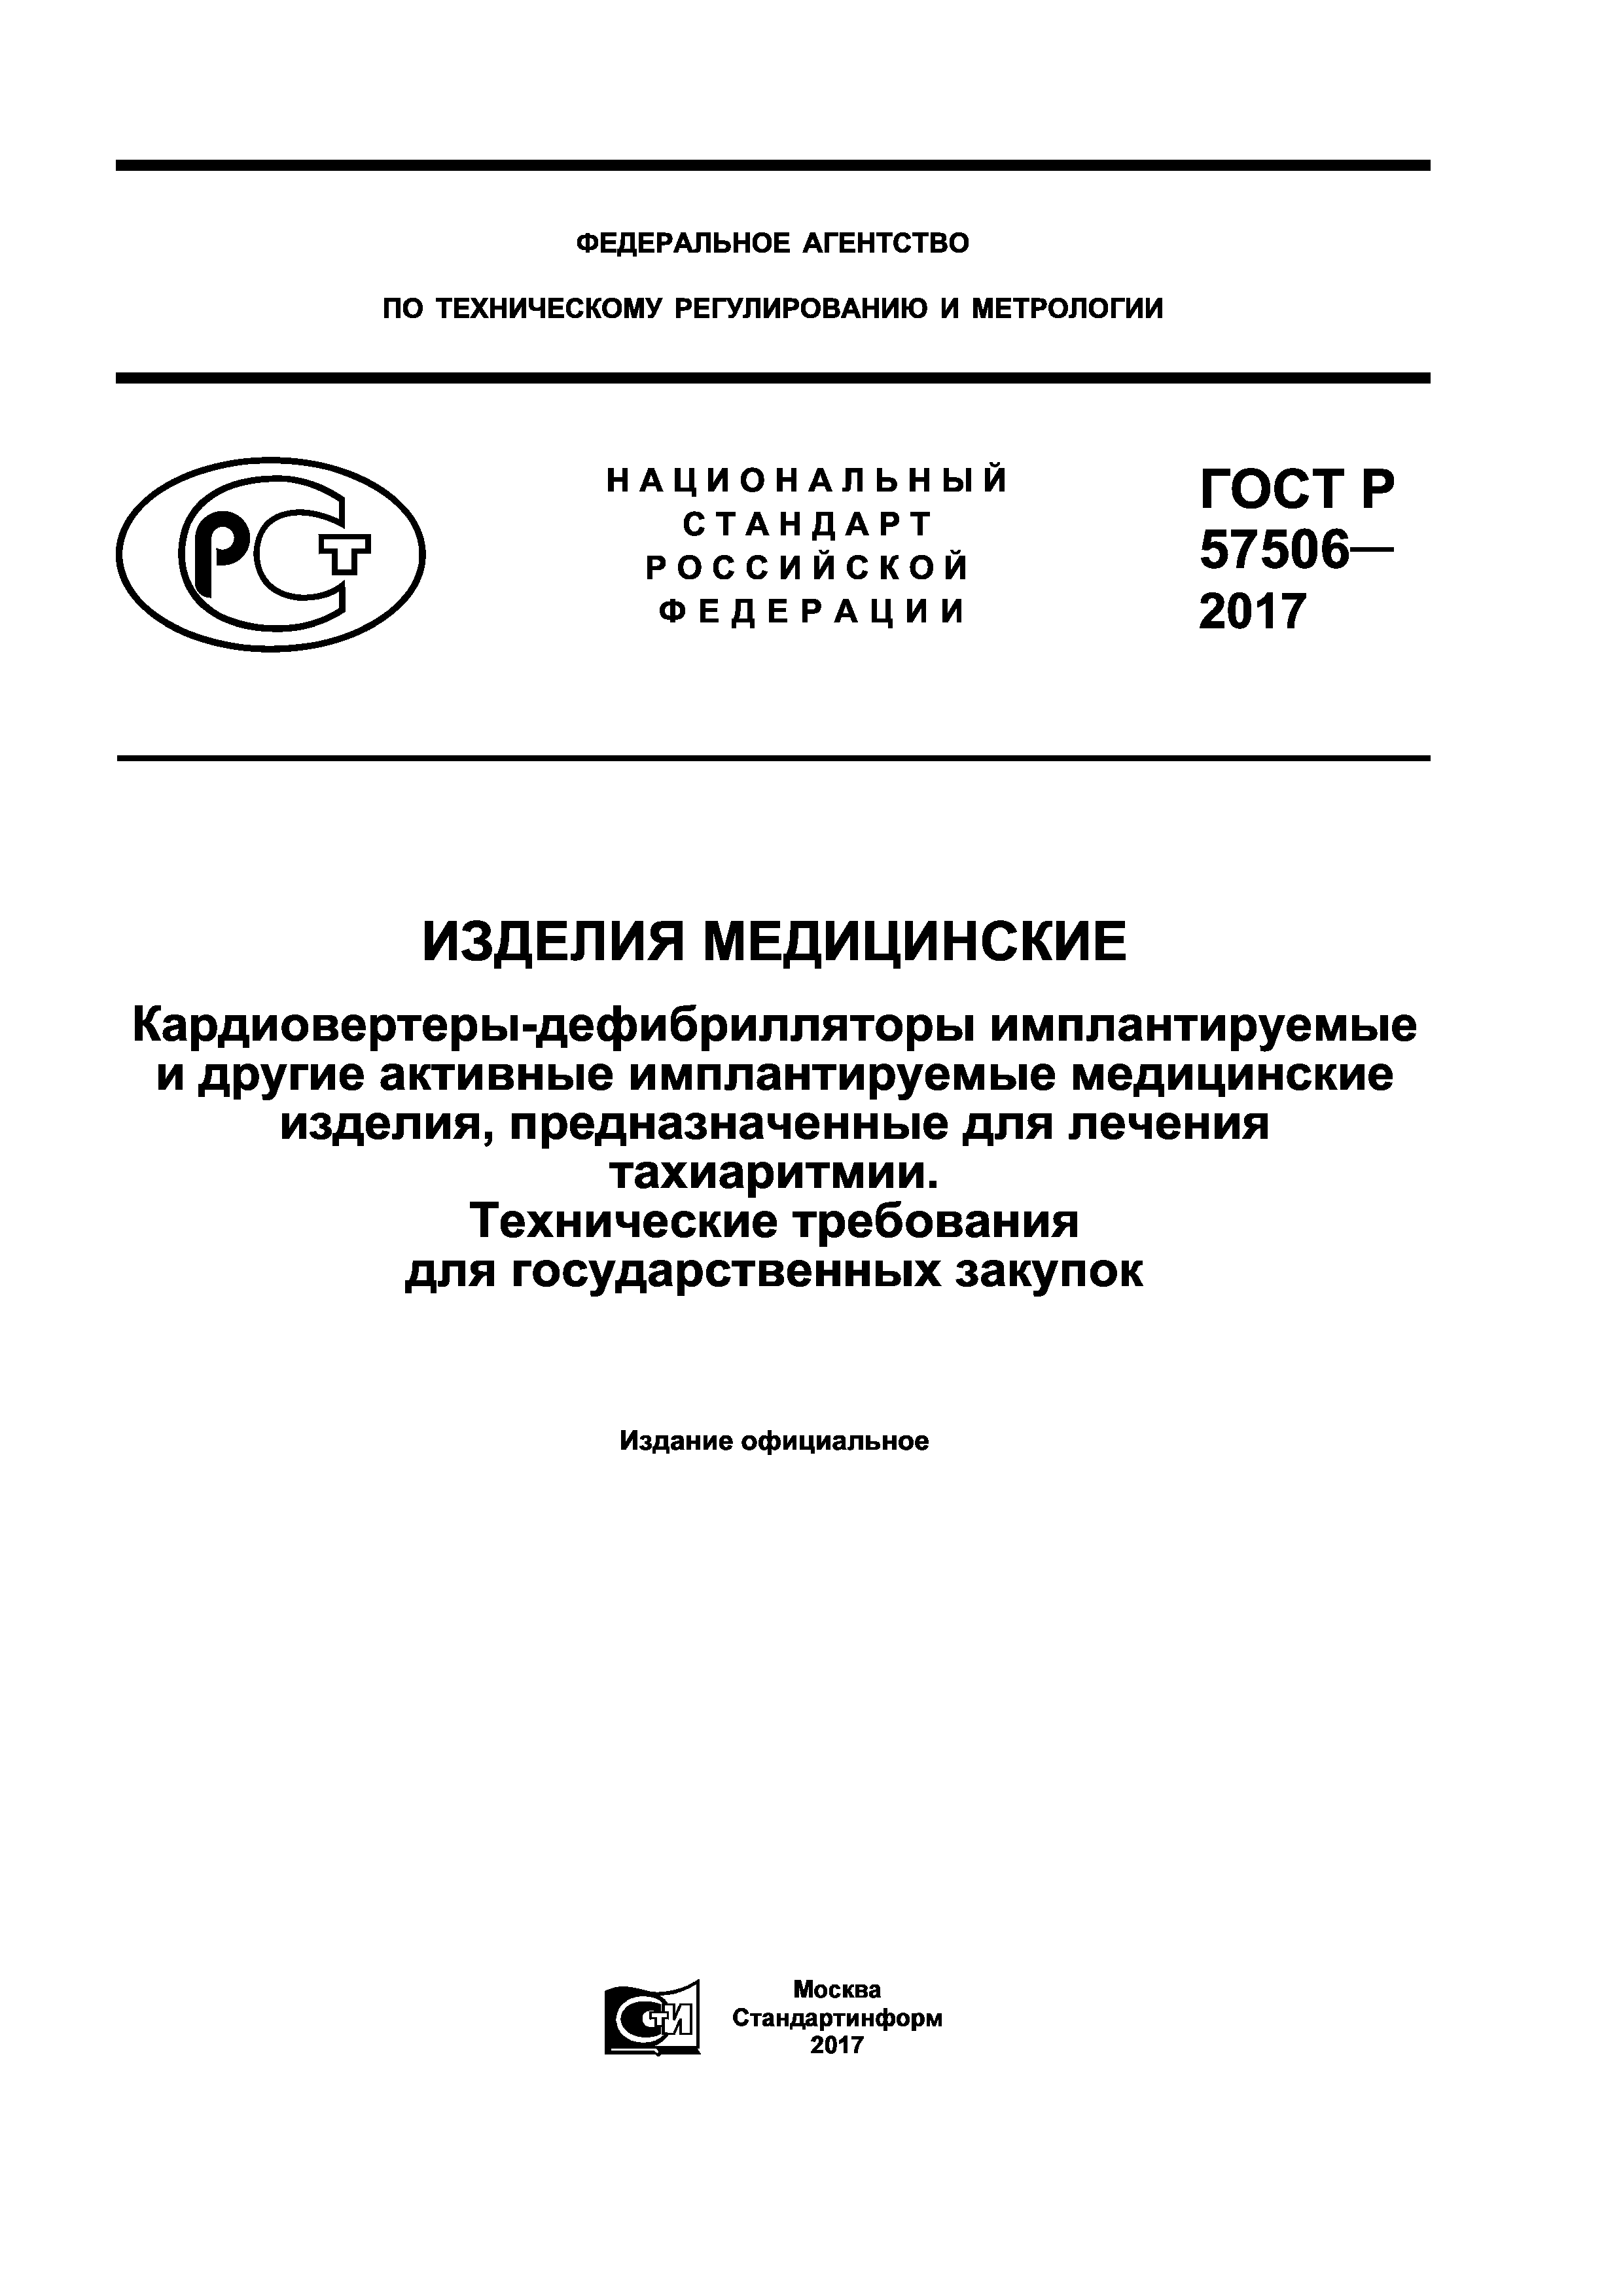 ГОСТ Р 57506-2017